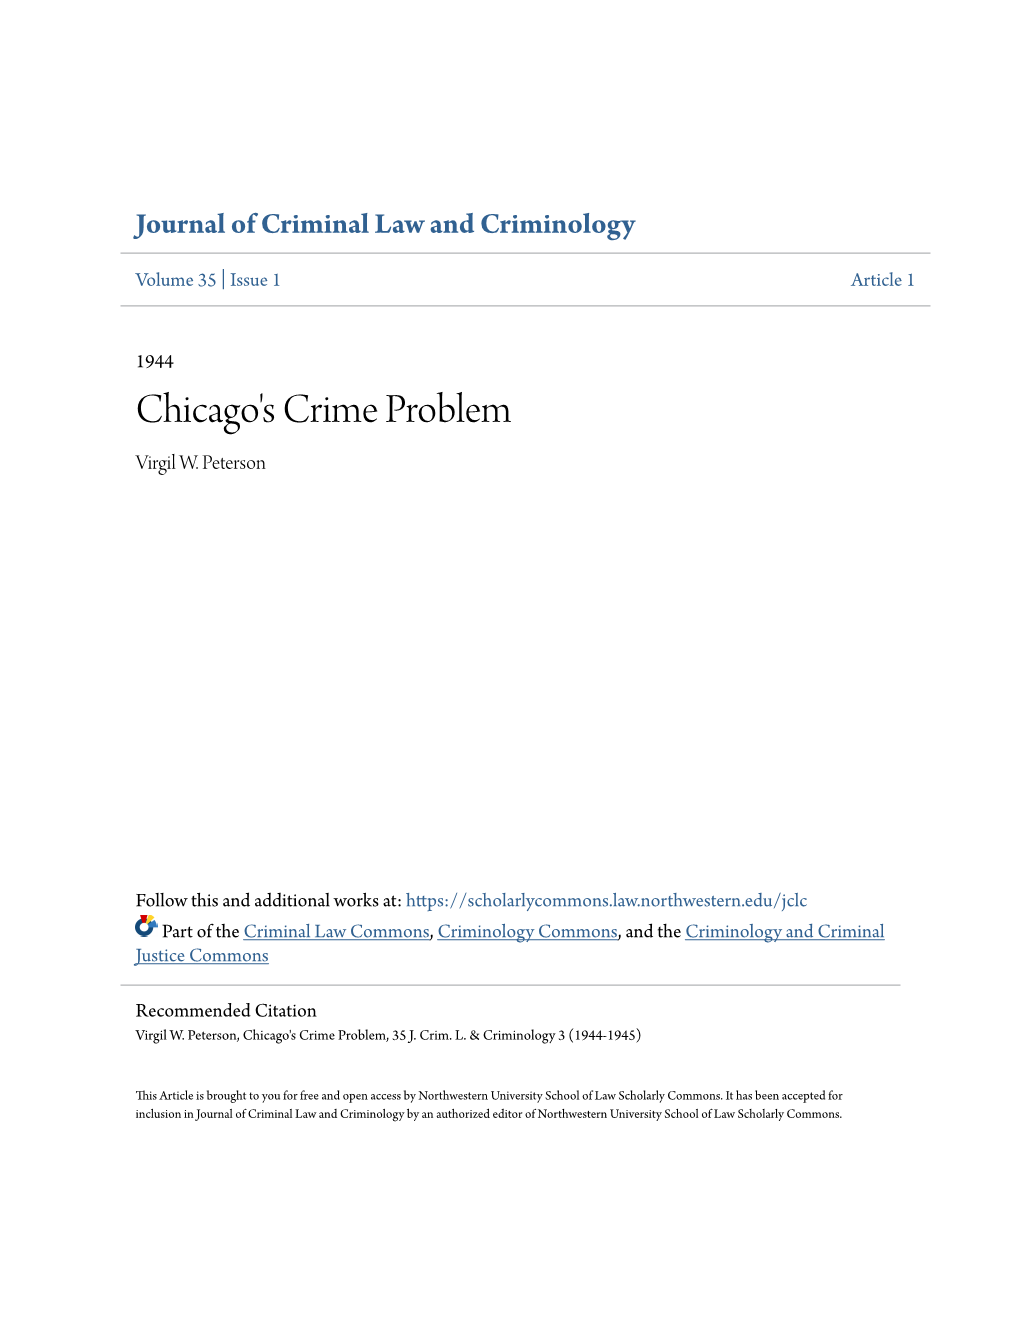 Chicago's Crime Problem Virgil W